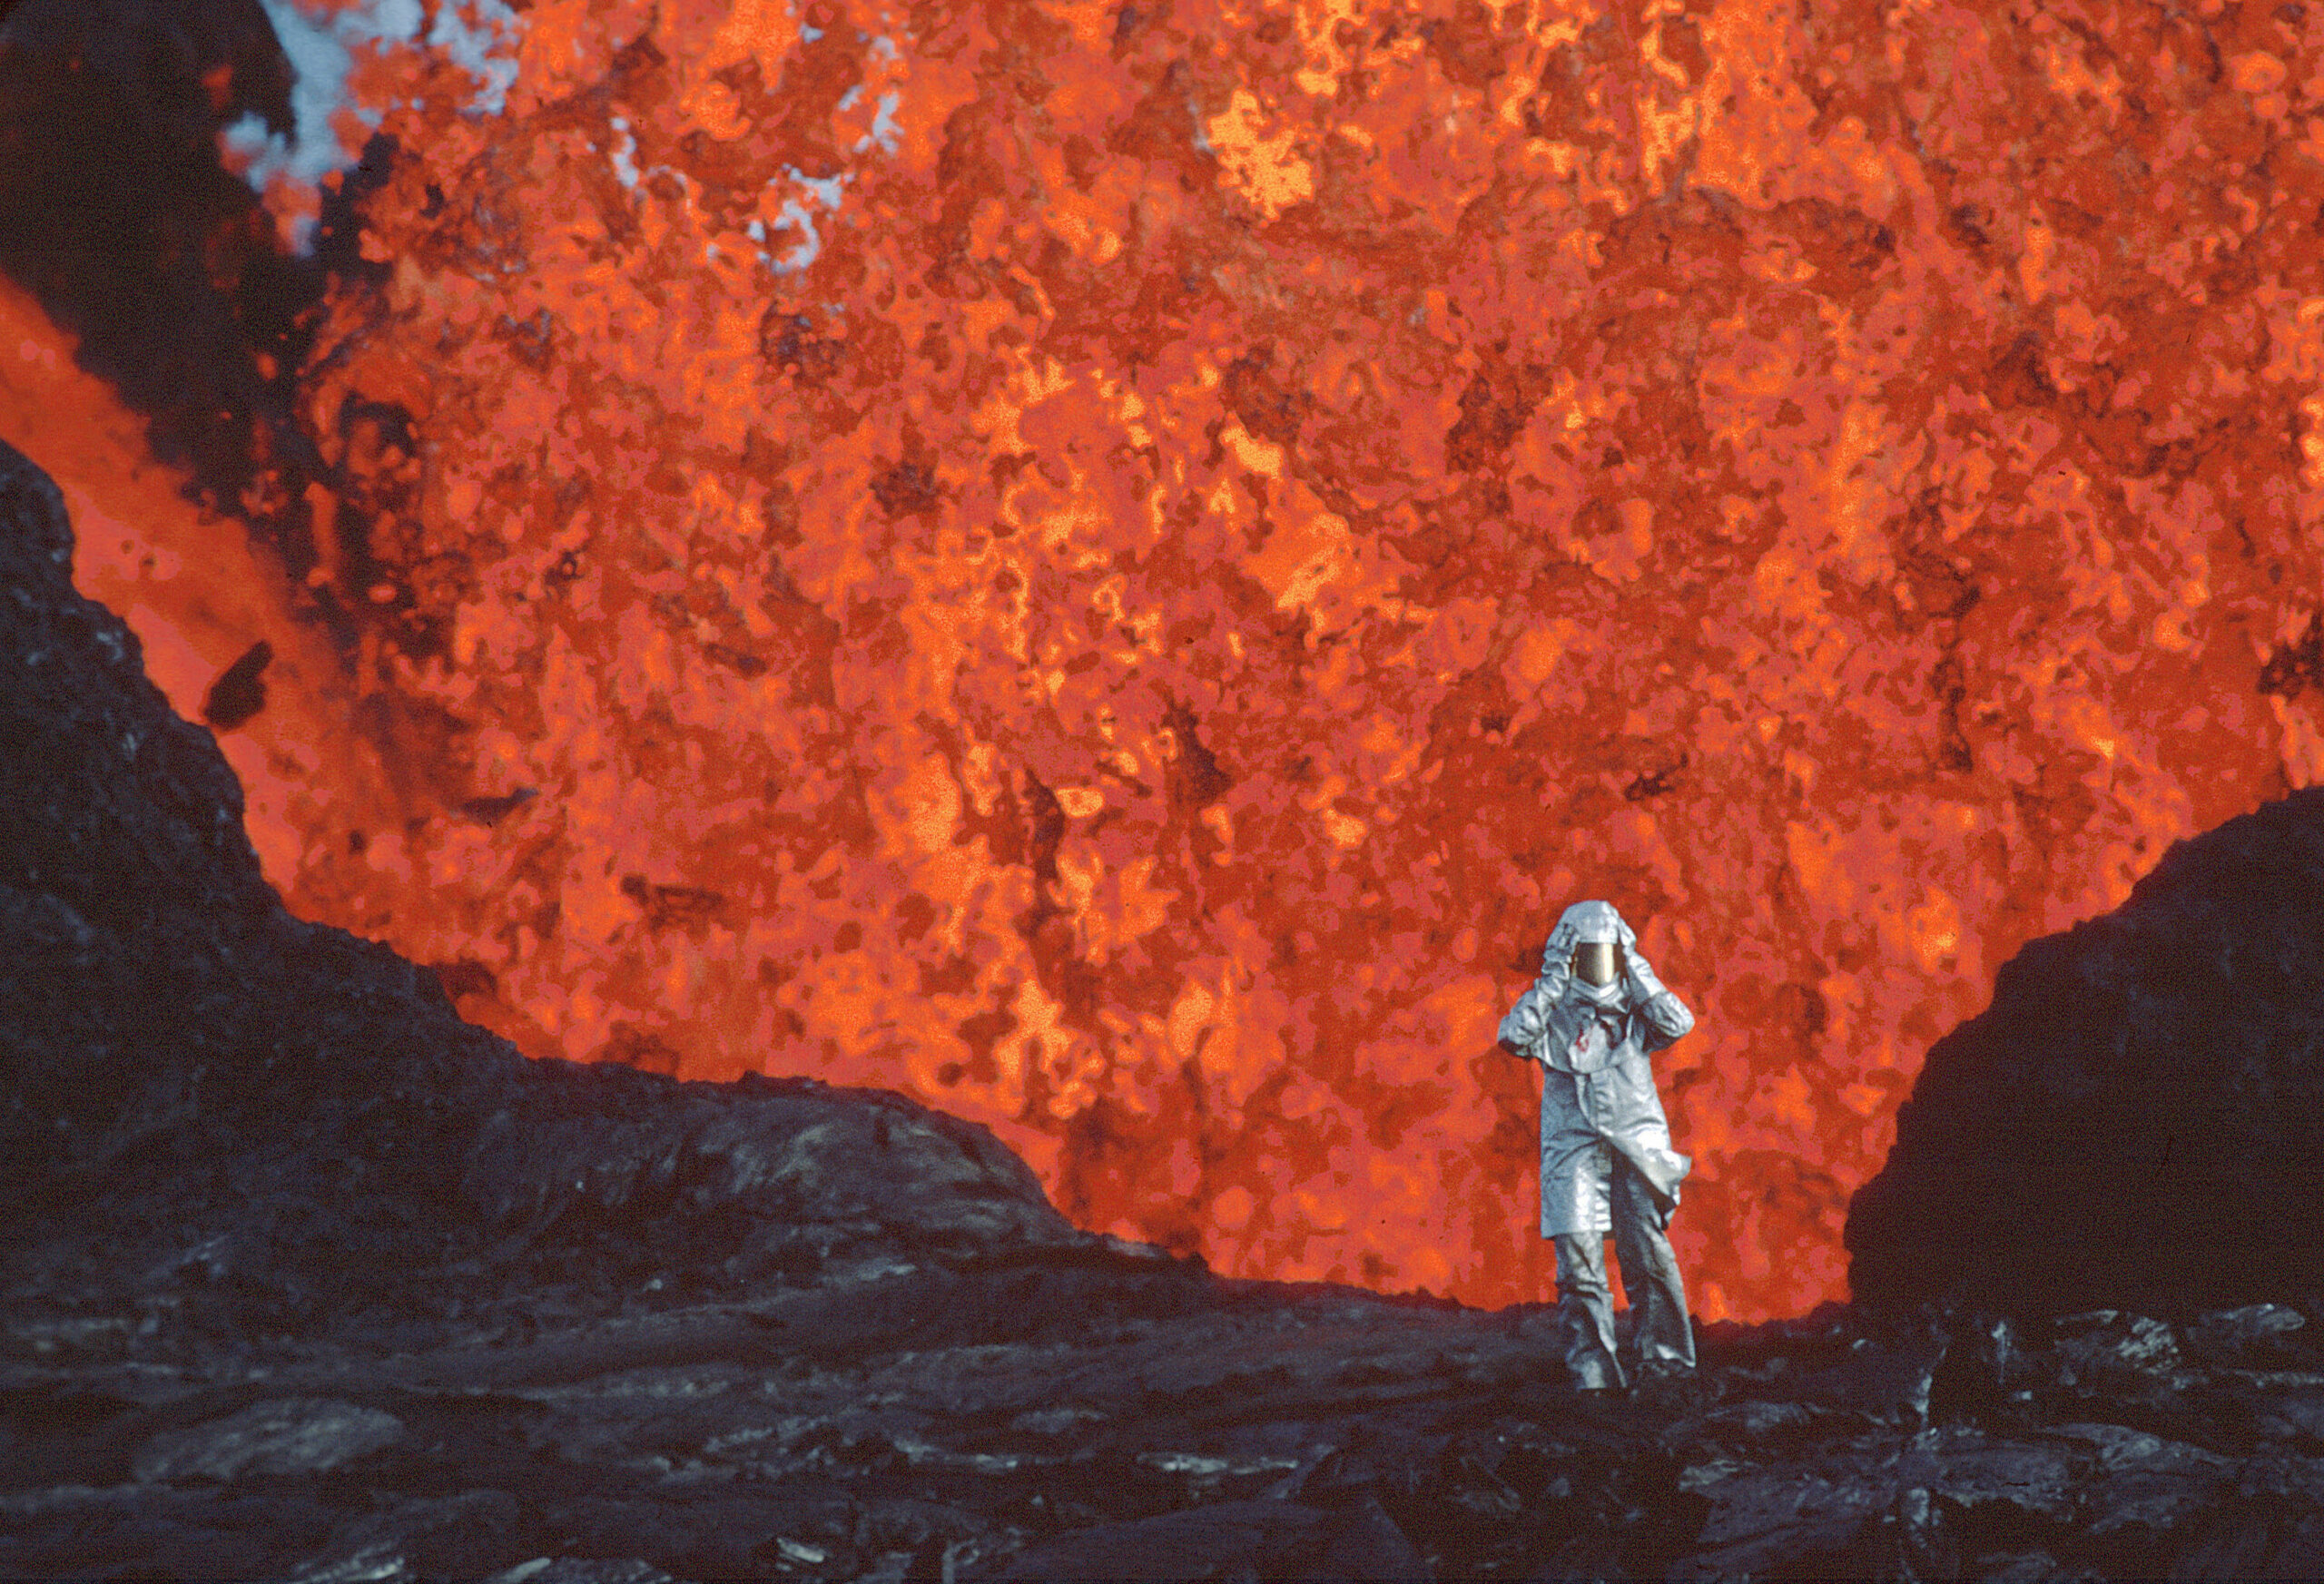 Katia Krafft wearing aluminized suit standing near lava burst at Krafla Volcano, Iceland. IMAGE 'EST